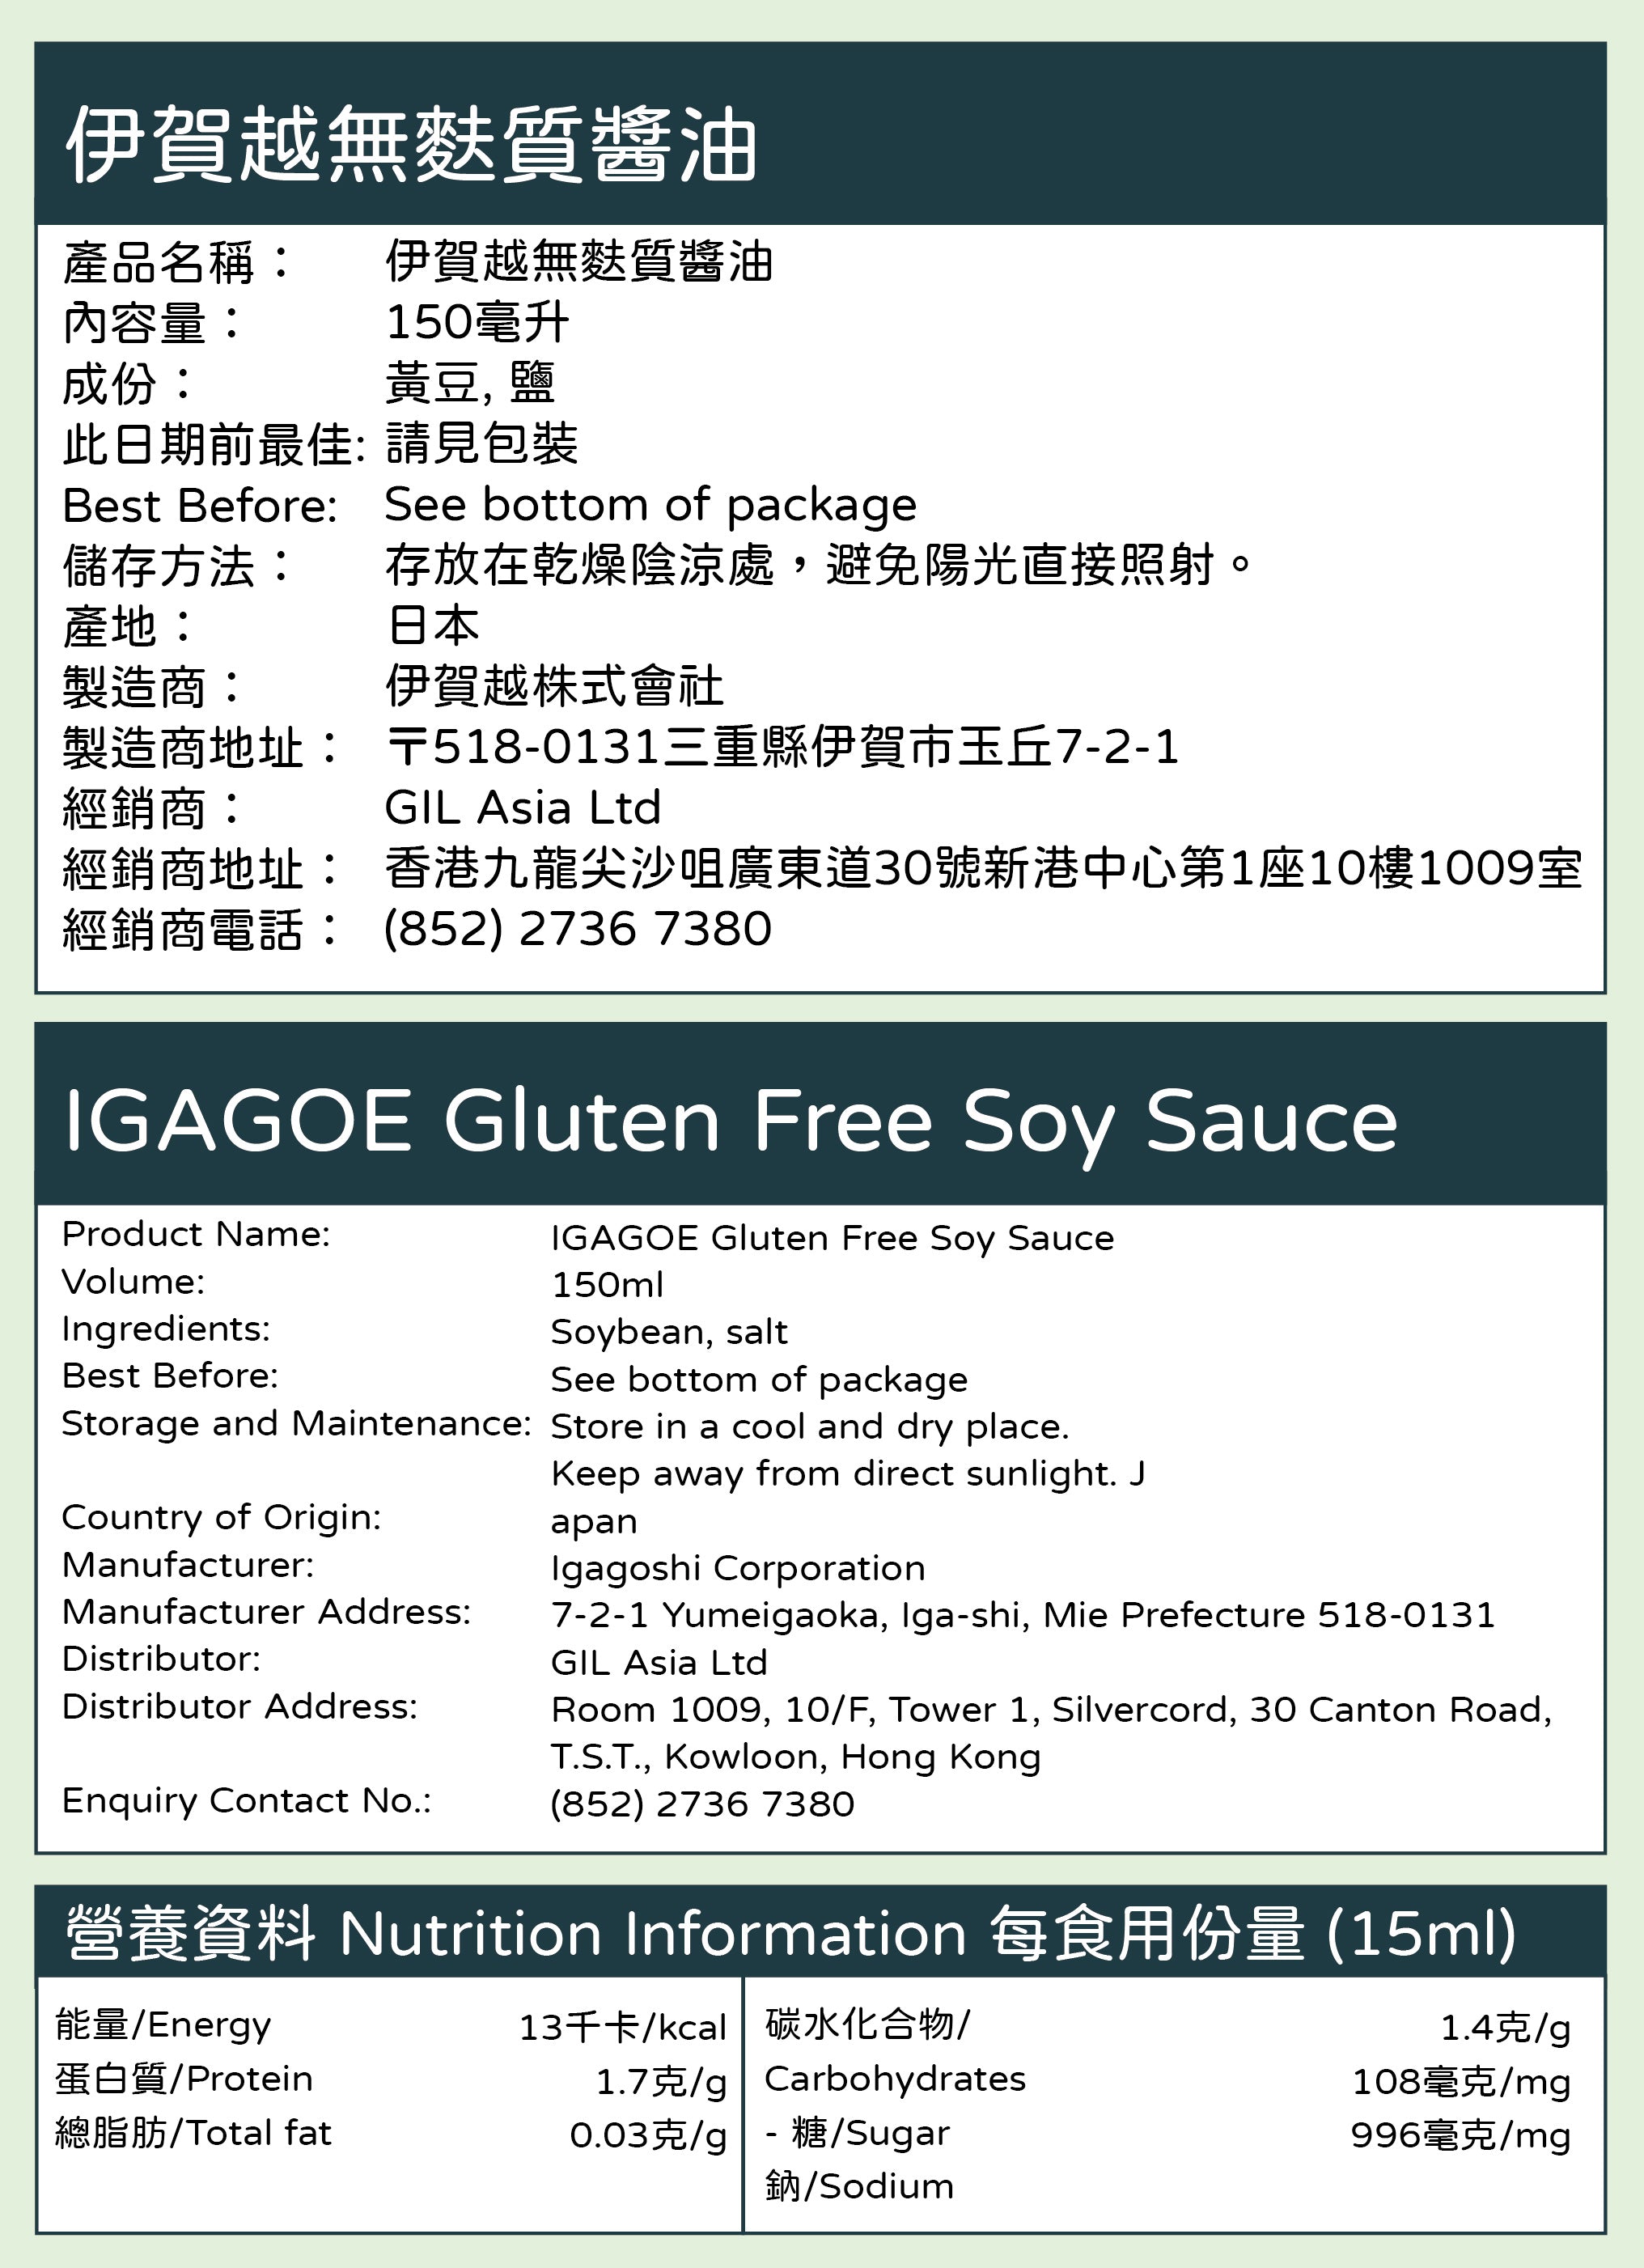 Igagoe Gluten Free Soy Sauce [150ml]